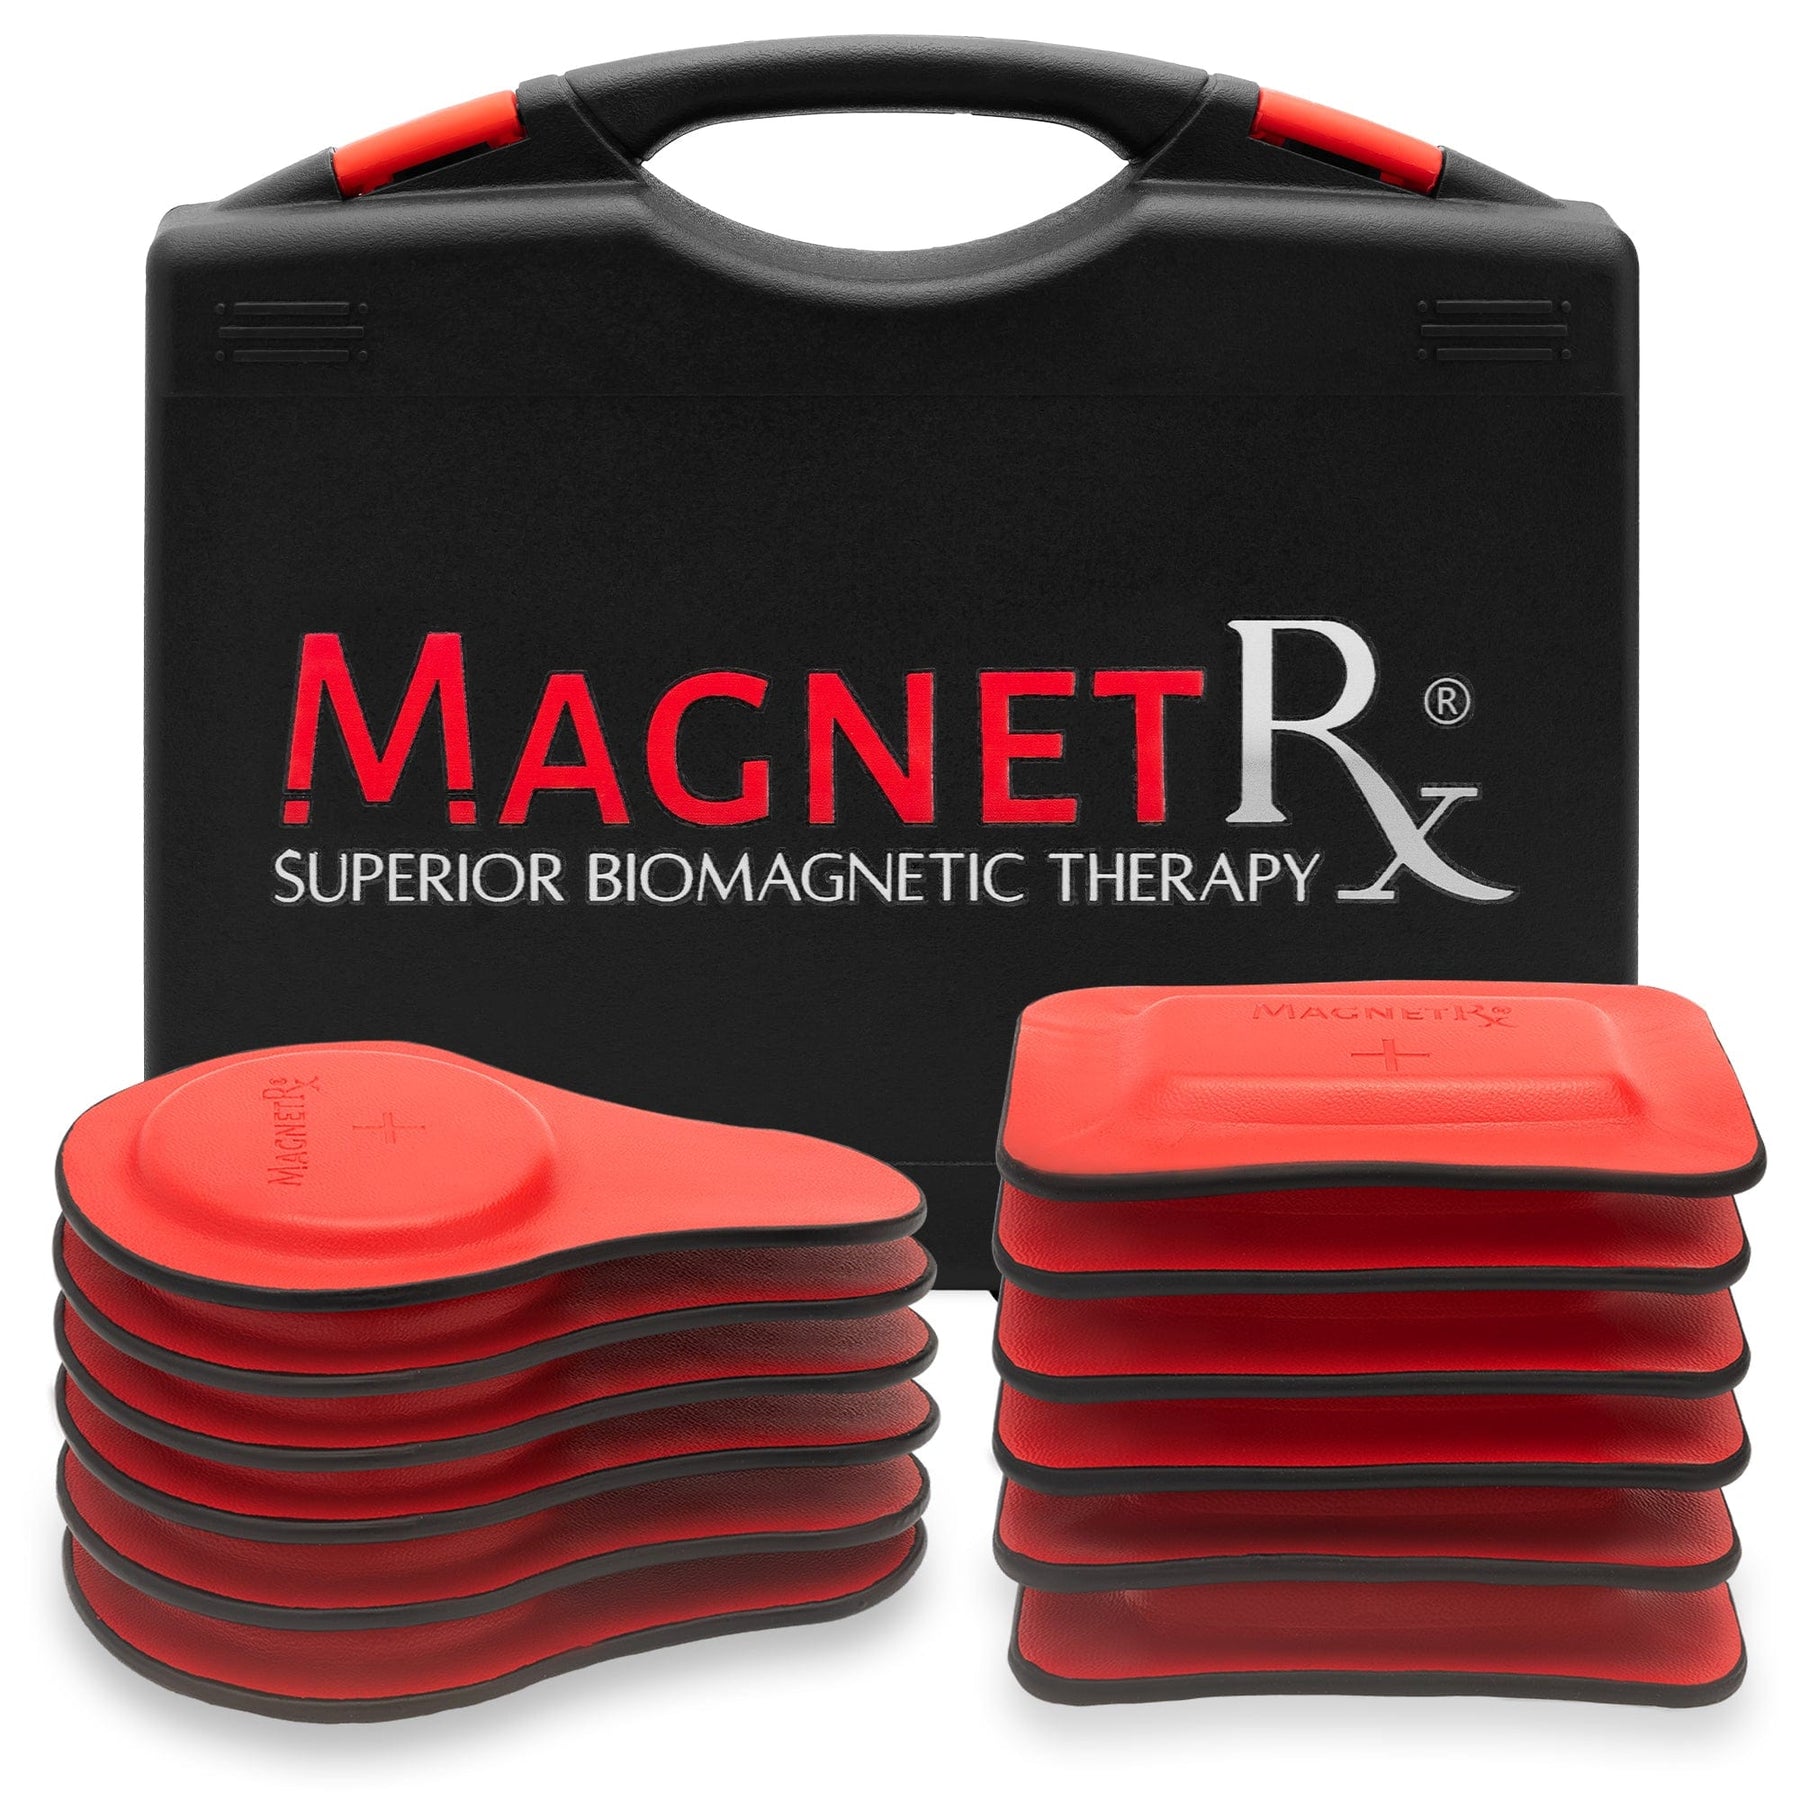 Magnetic Biomagnetic Therapy Biomagnetic Therapy Magnets Kit (12 Mixed Units) MagnetRX